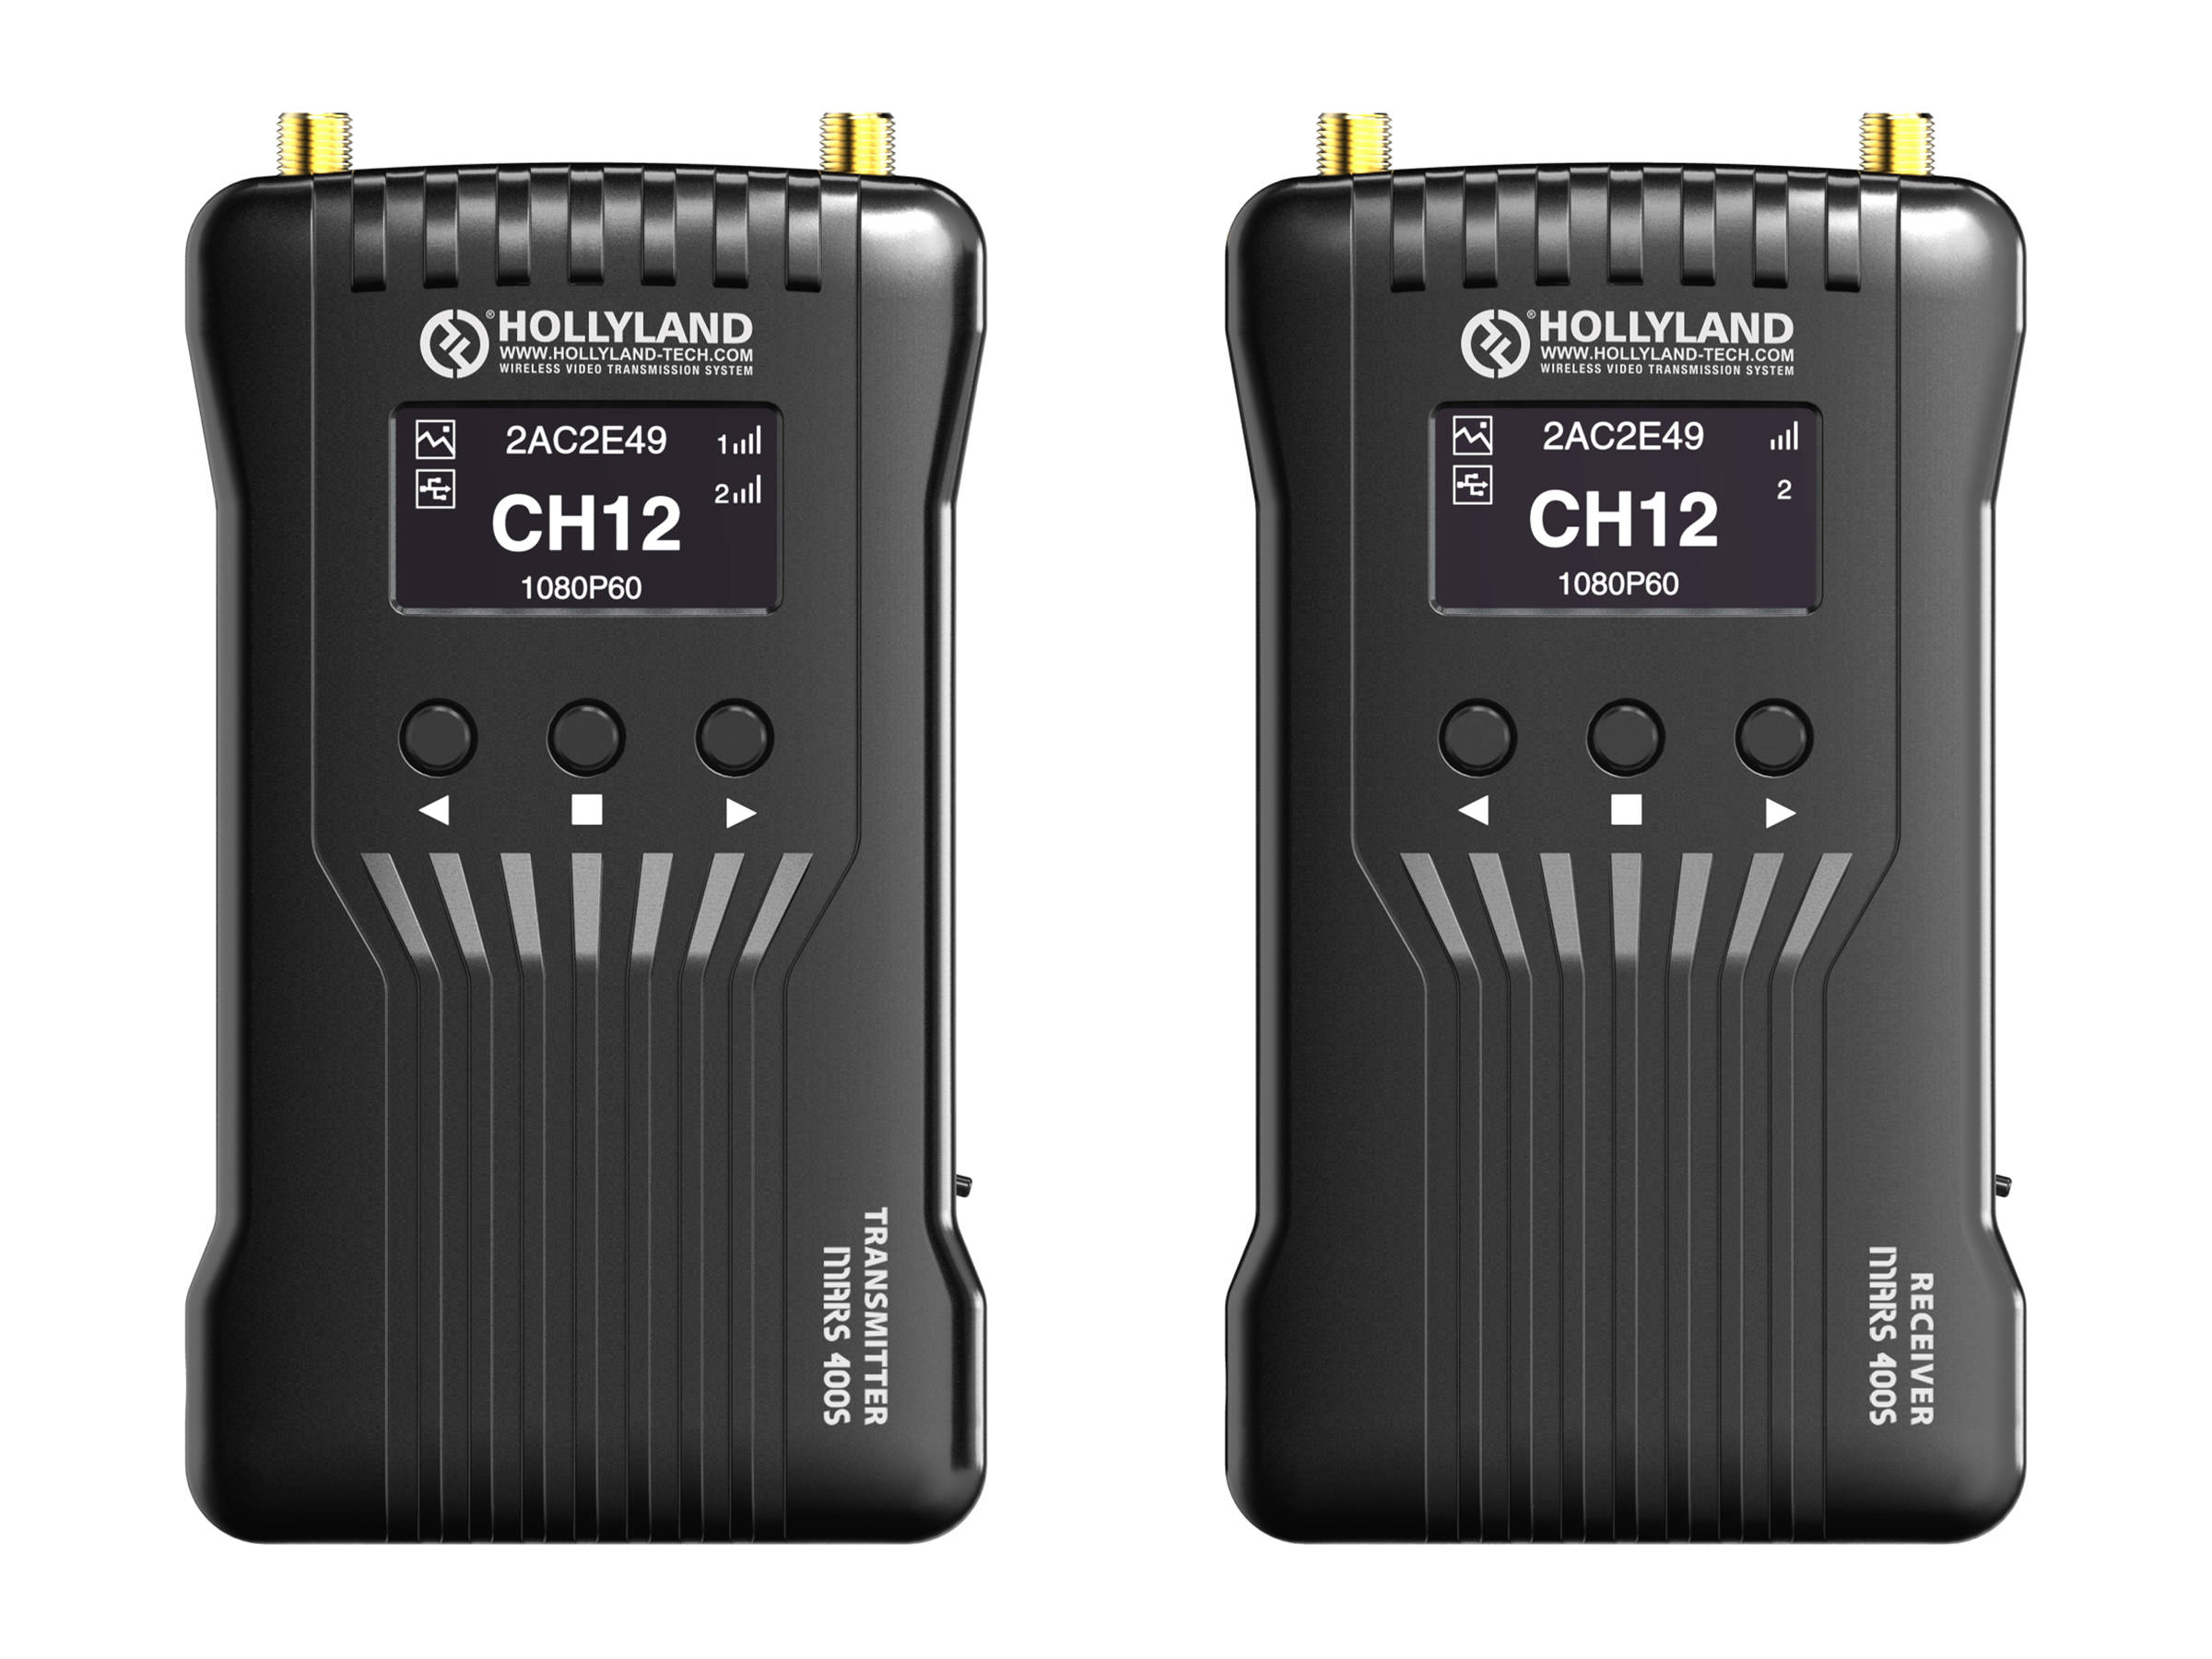 Hollyland HL-Mars-400S SDI/HDMI Wireless Video Transmission (Transmitter/Receiver) System - 400ft